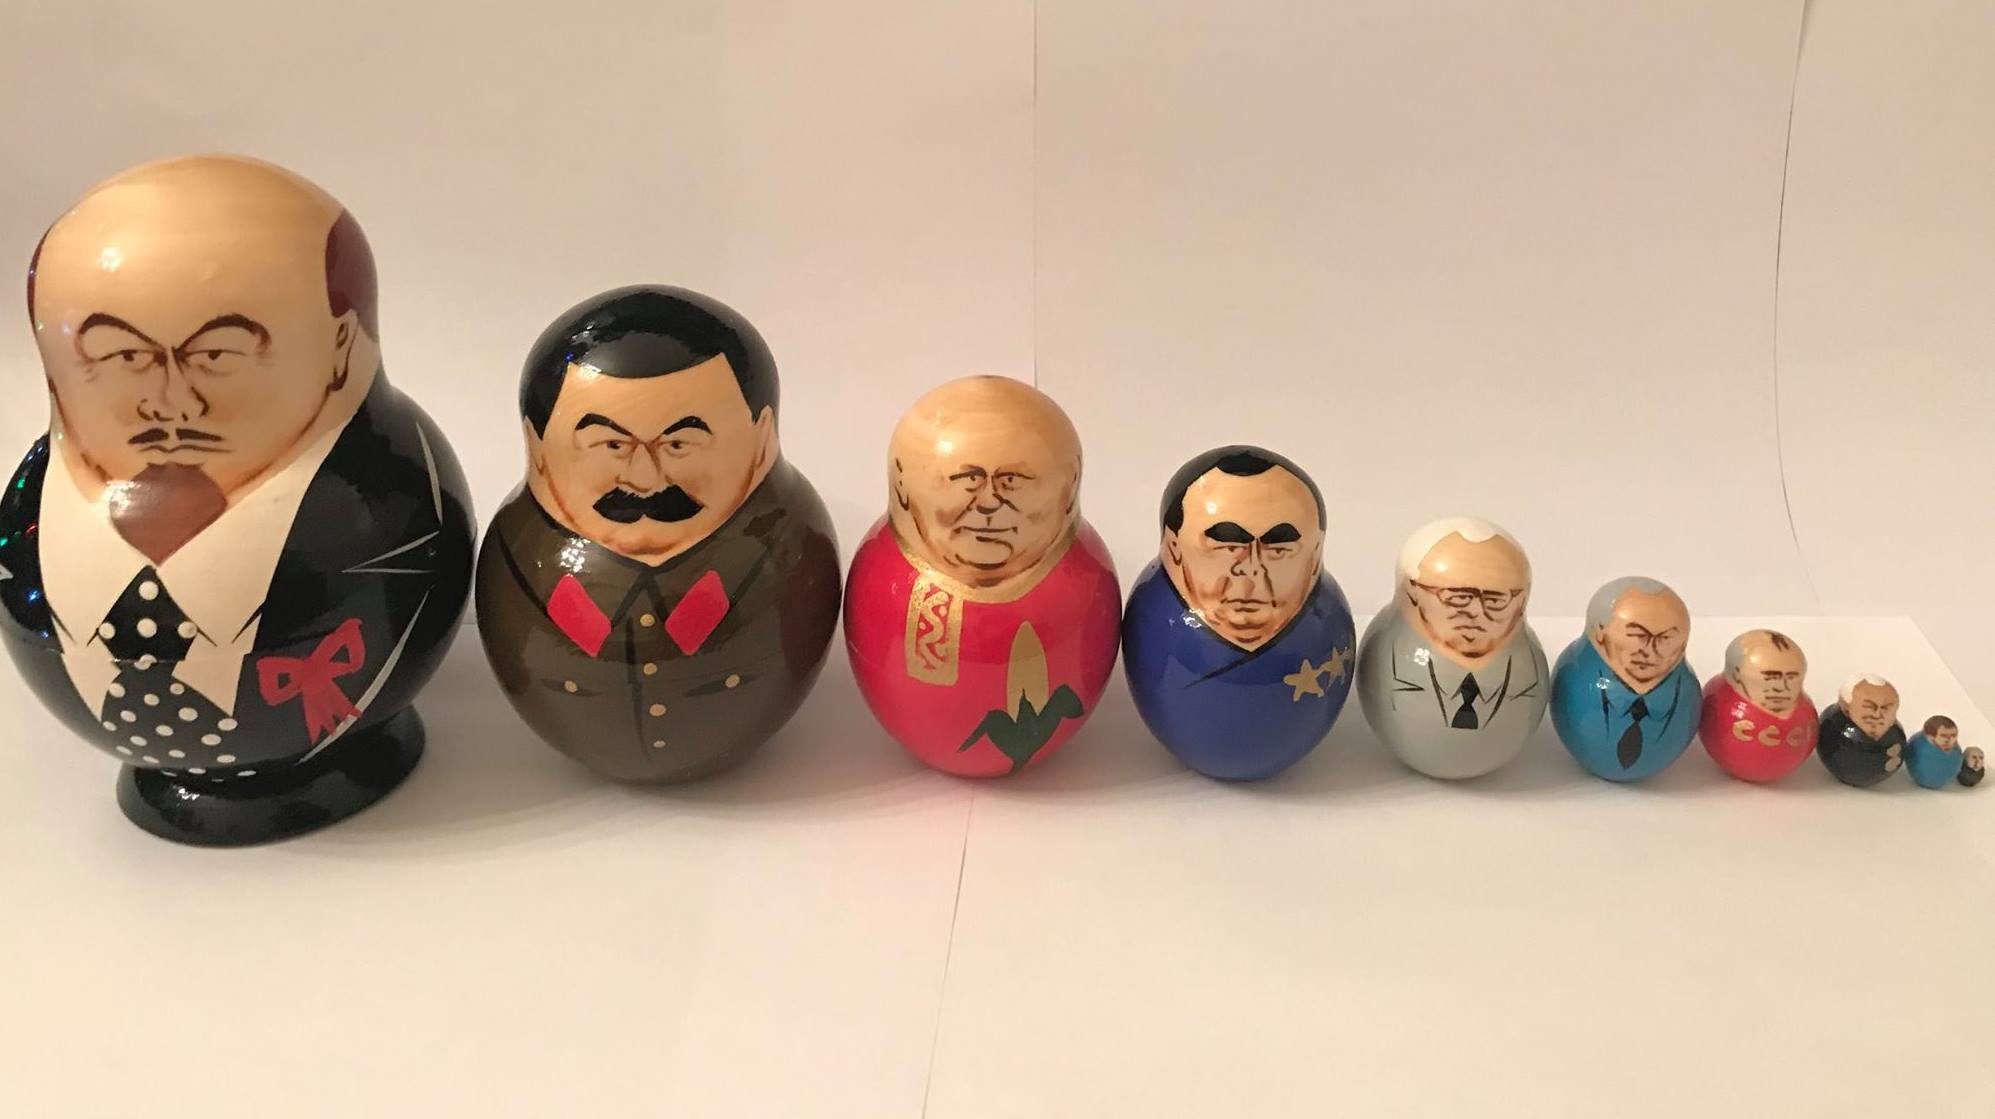 gorbachev russian doll